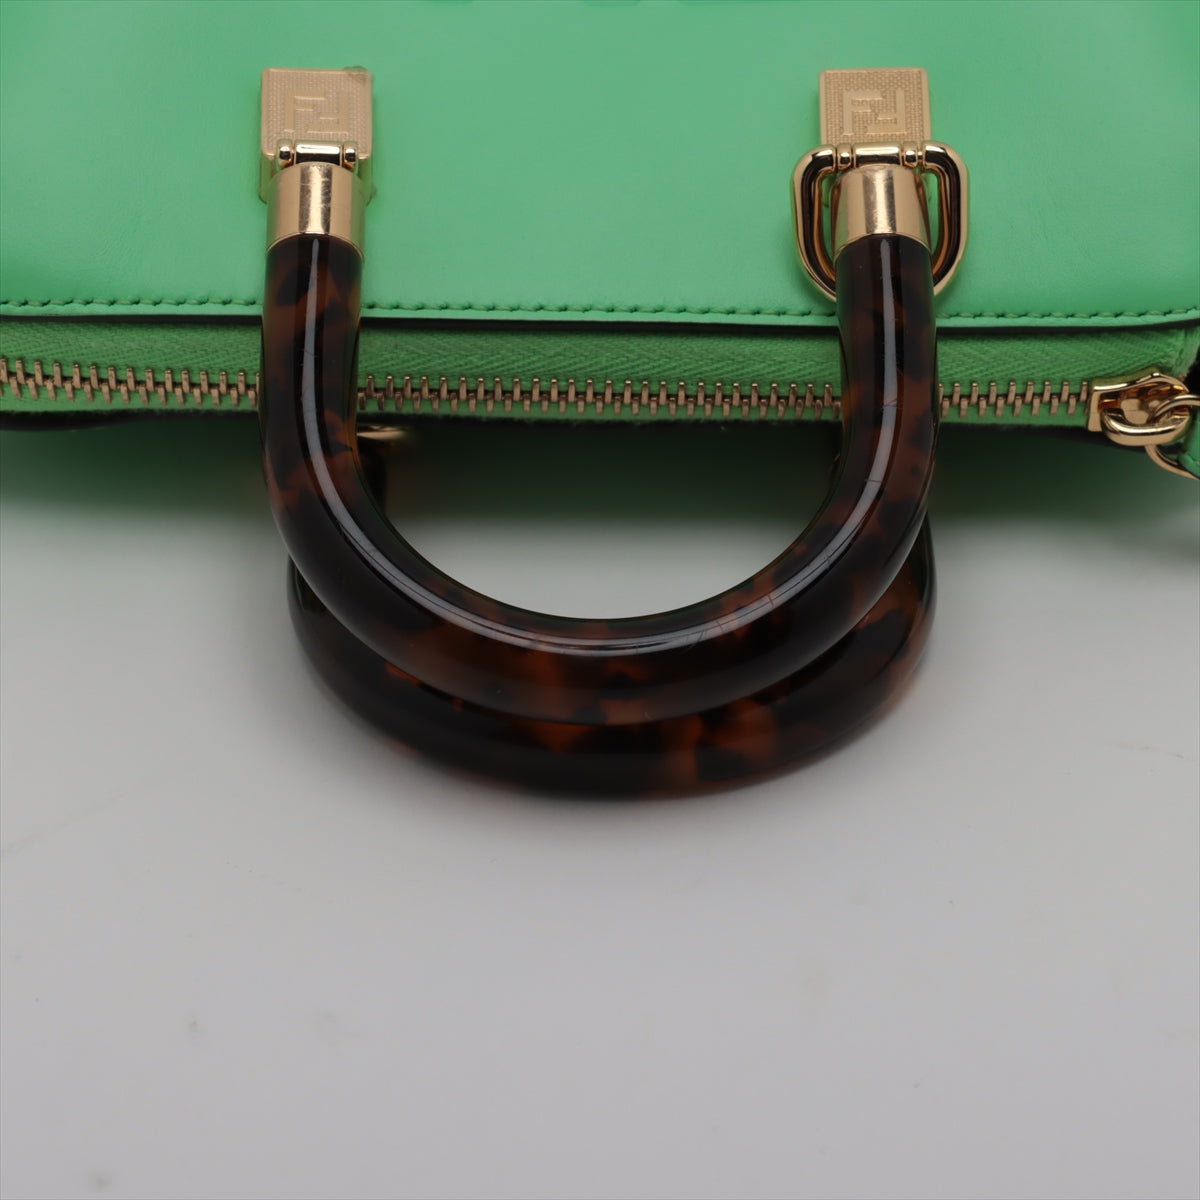 Fendi Byzaw Mini Leather Handbag Green 8BS067 Strap Parts